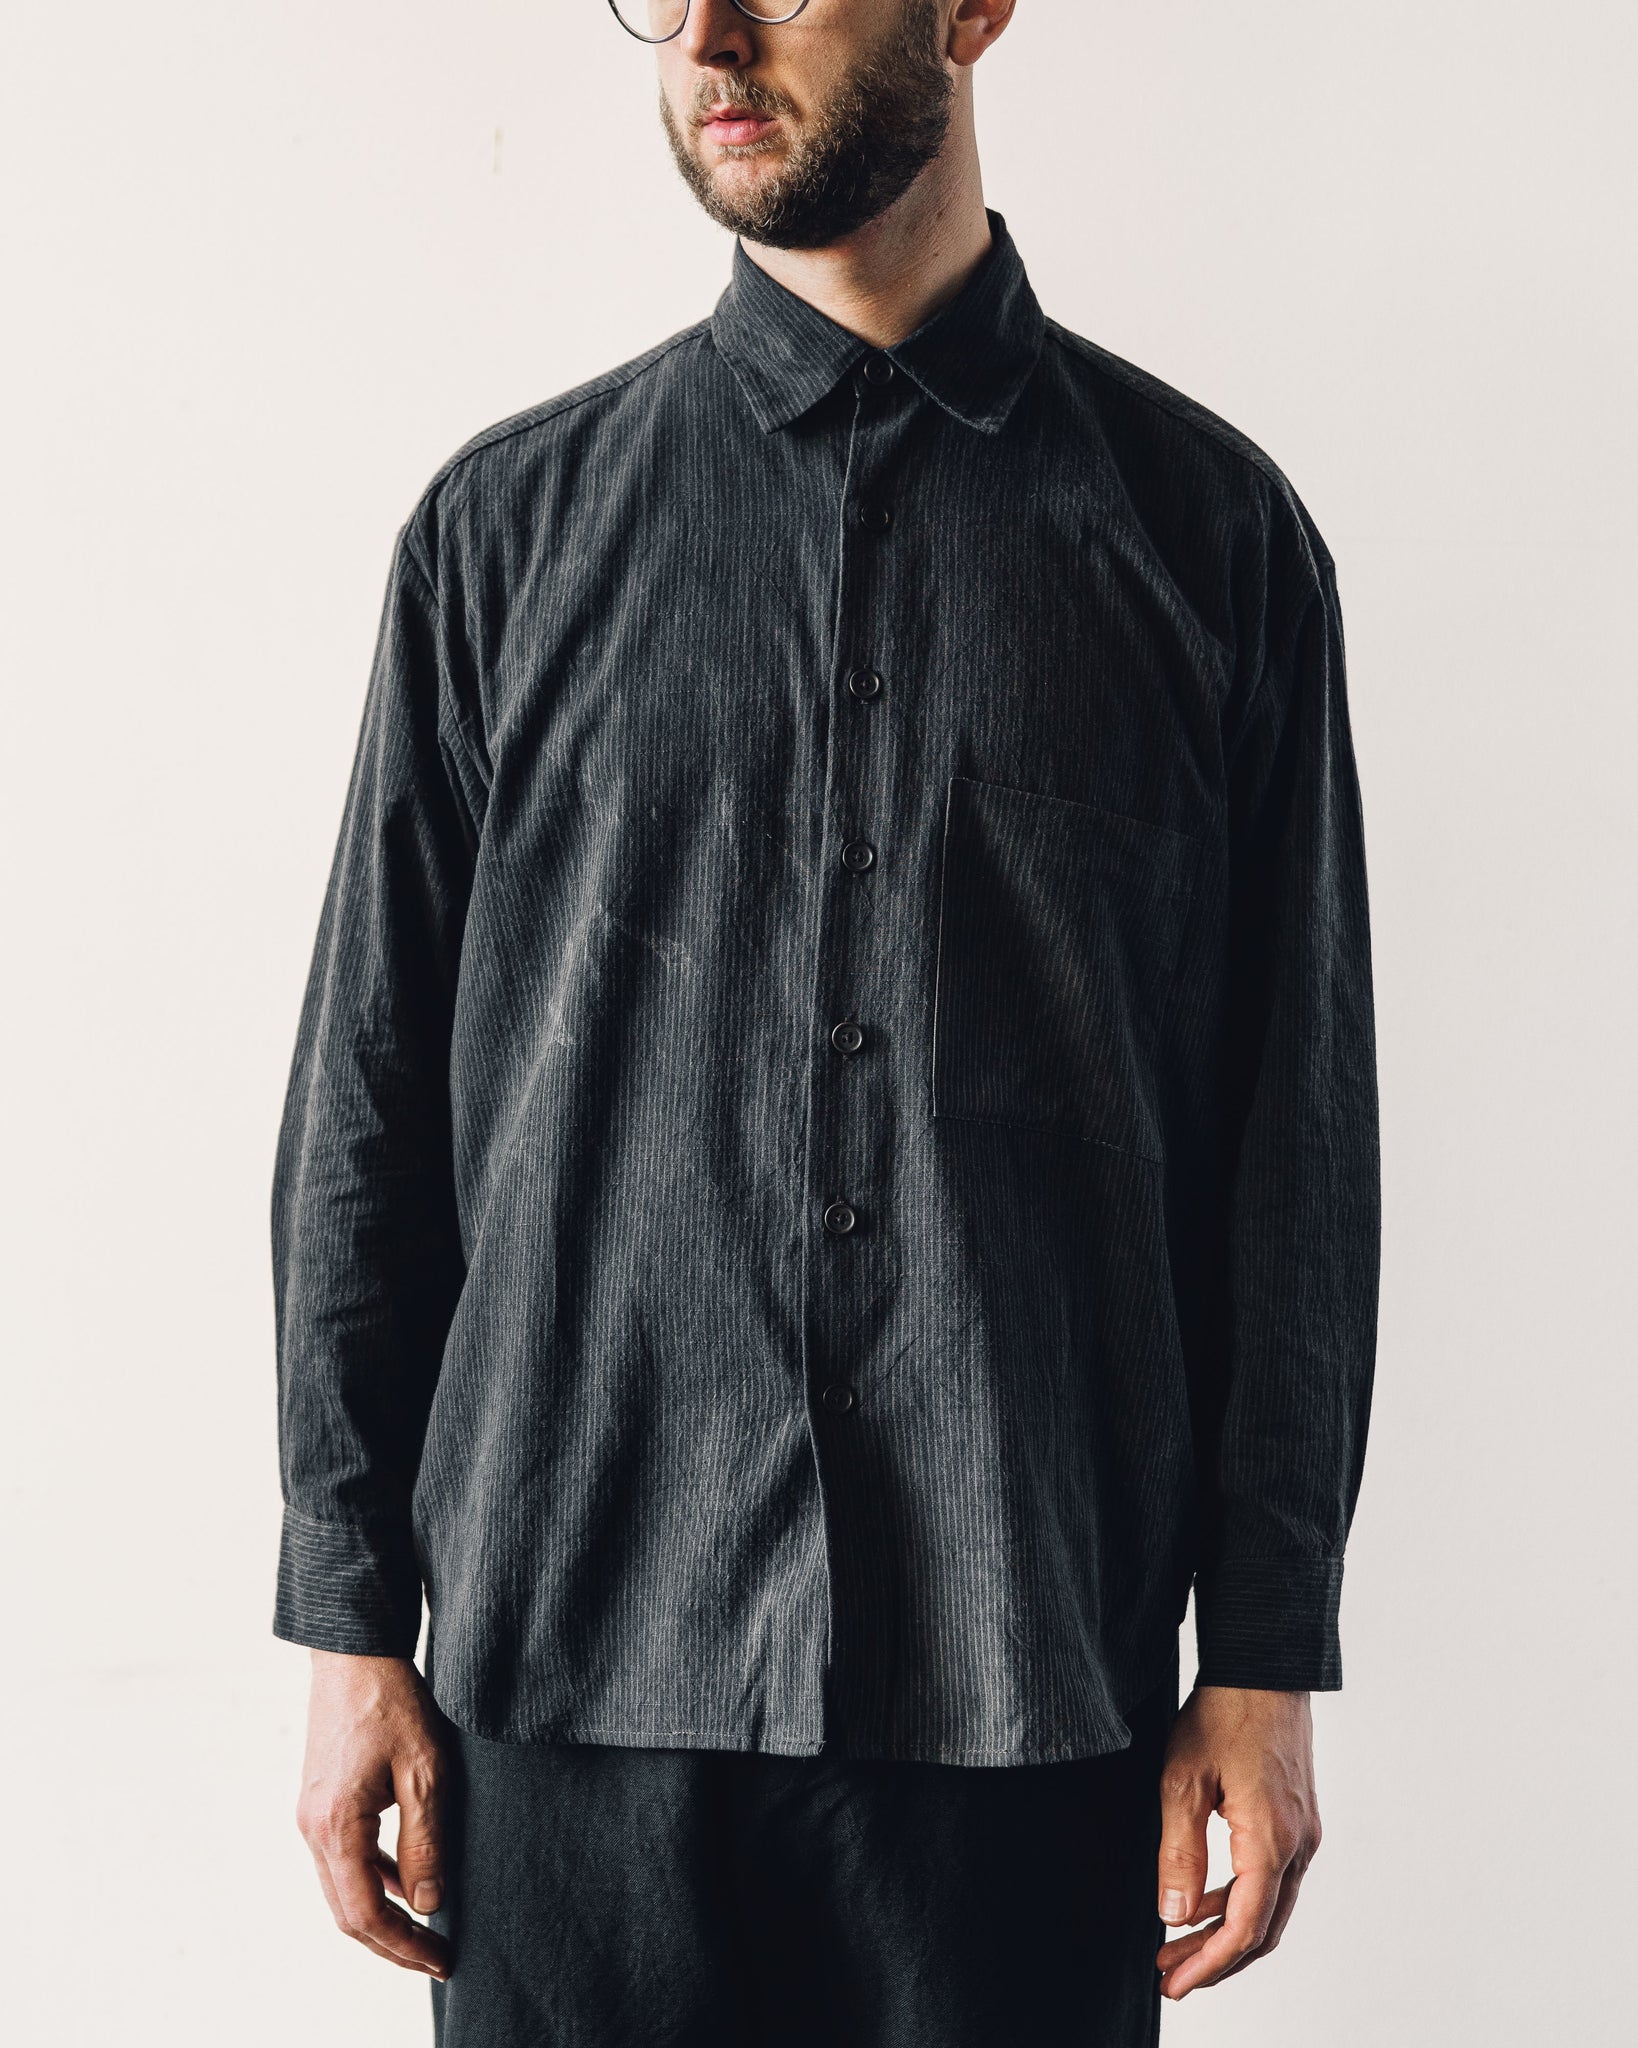 Evan Kinori Big Shirt II, Sumi Ink Overdye Black | Glasswing